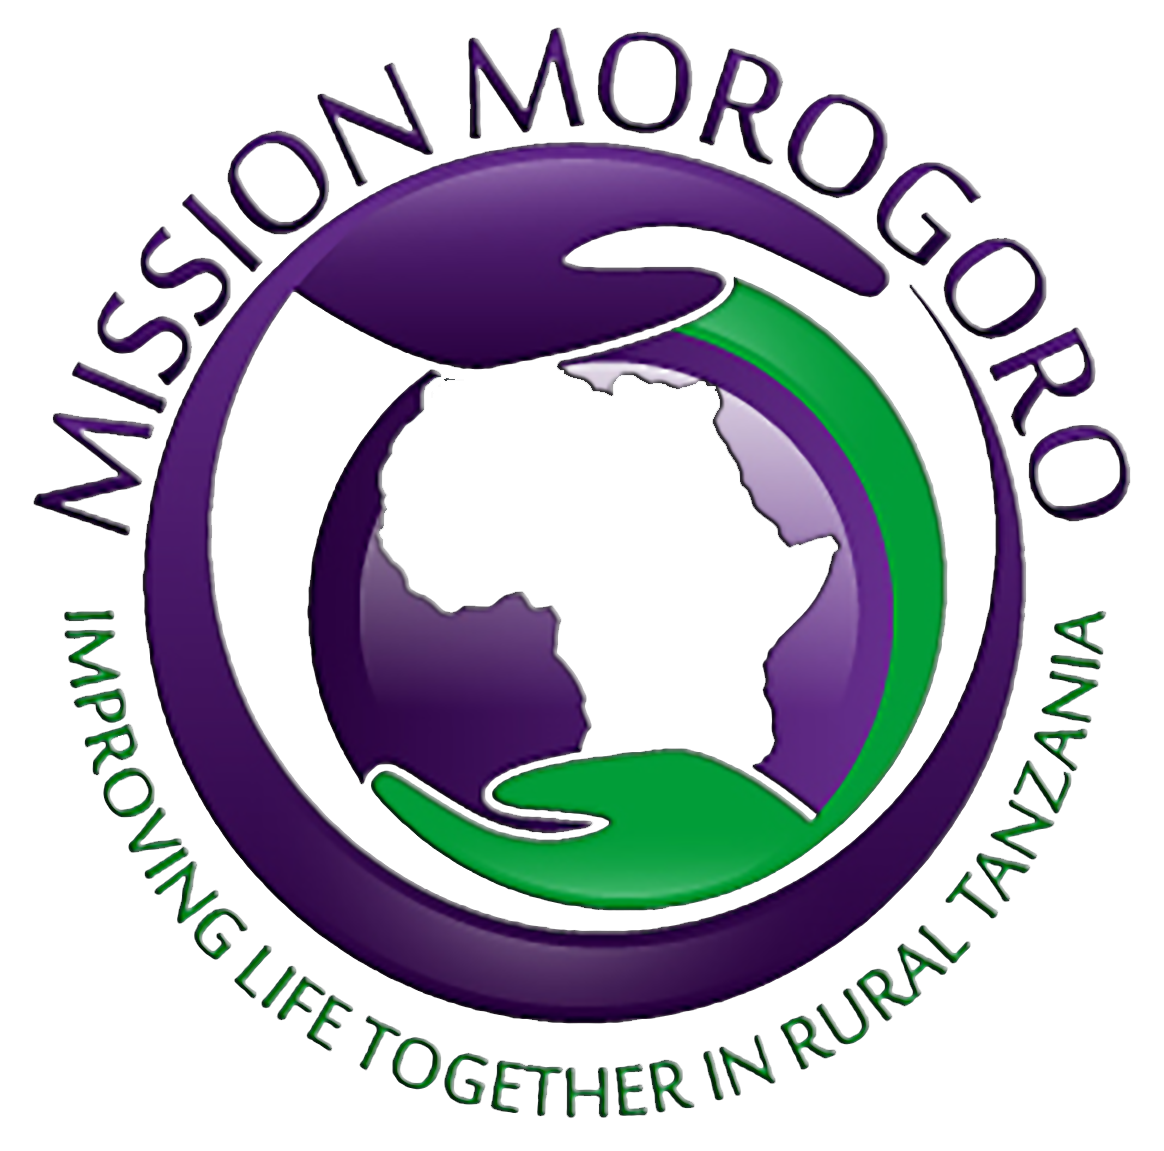 MISSION MOROGORO